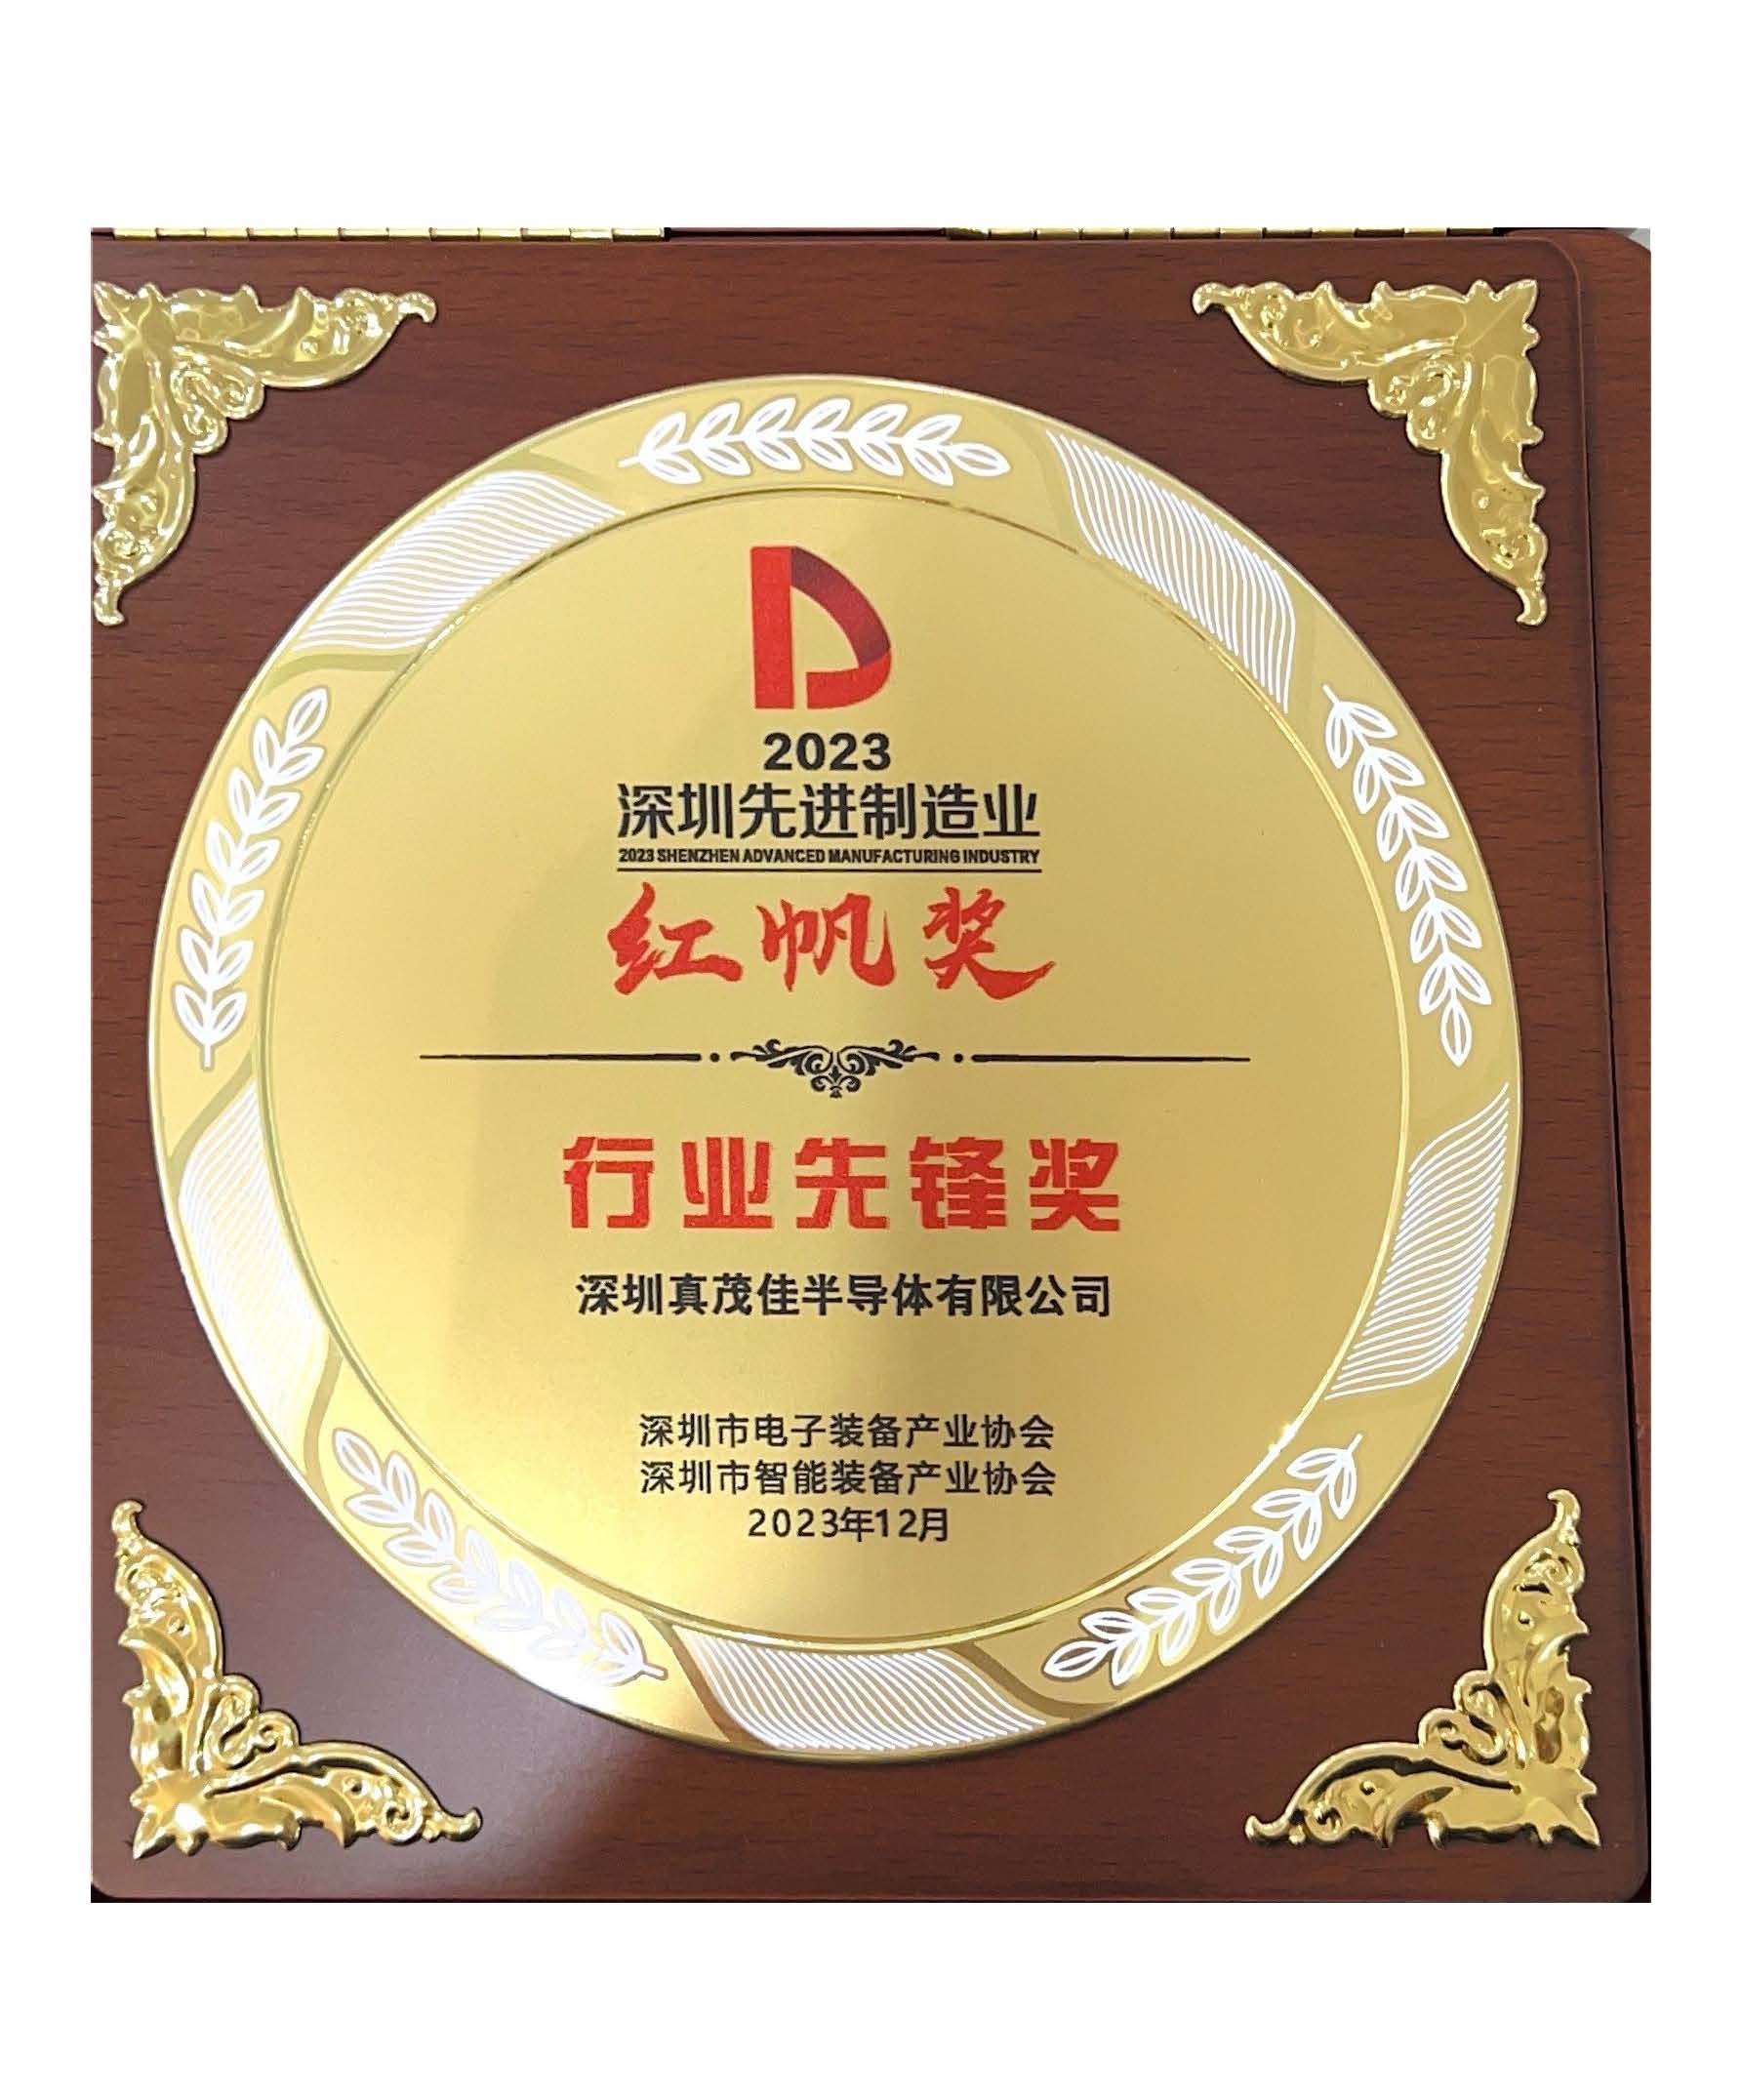 Shenzhen Advanced Manufacturing Enterprise Red Sail Award